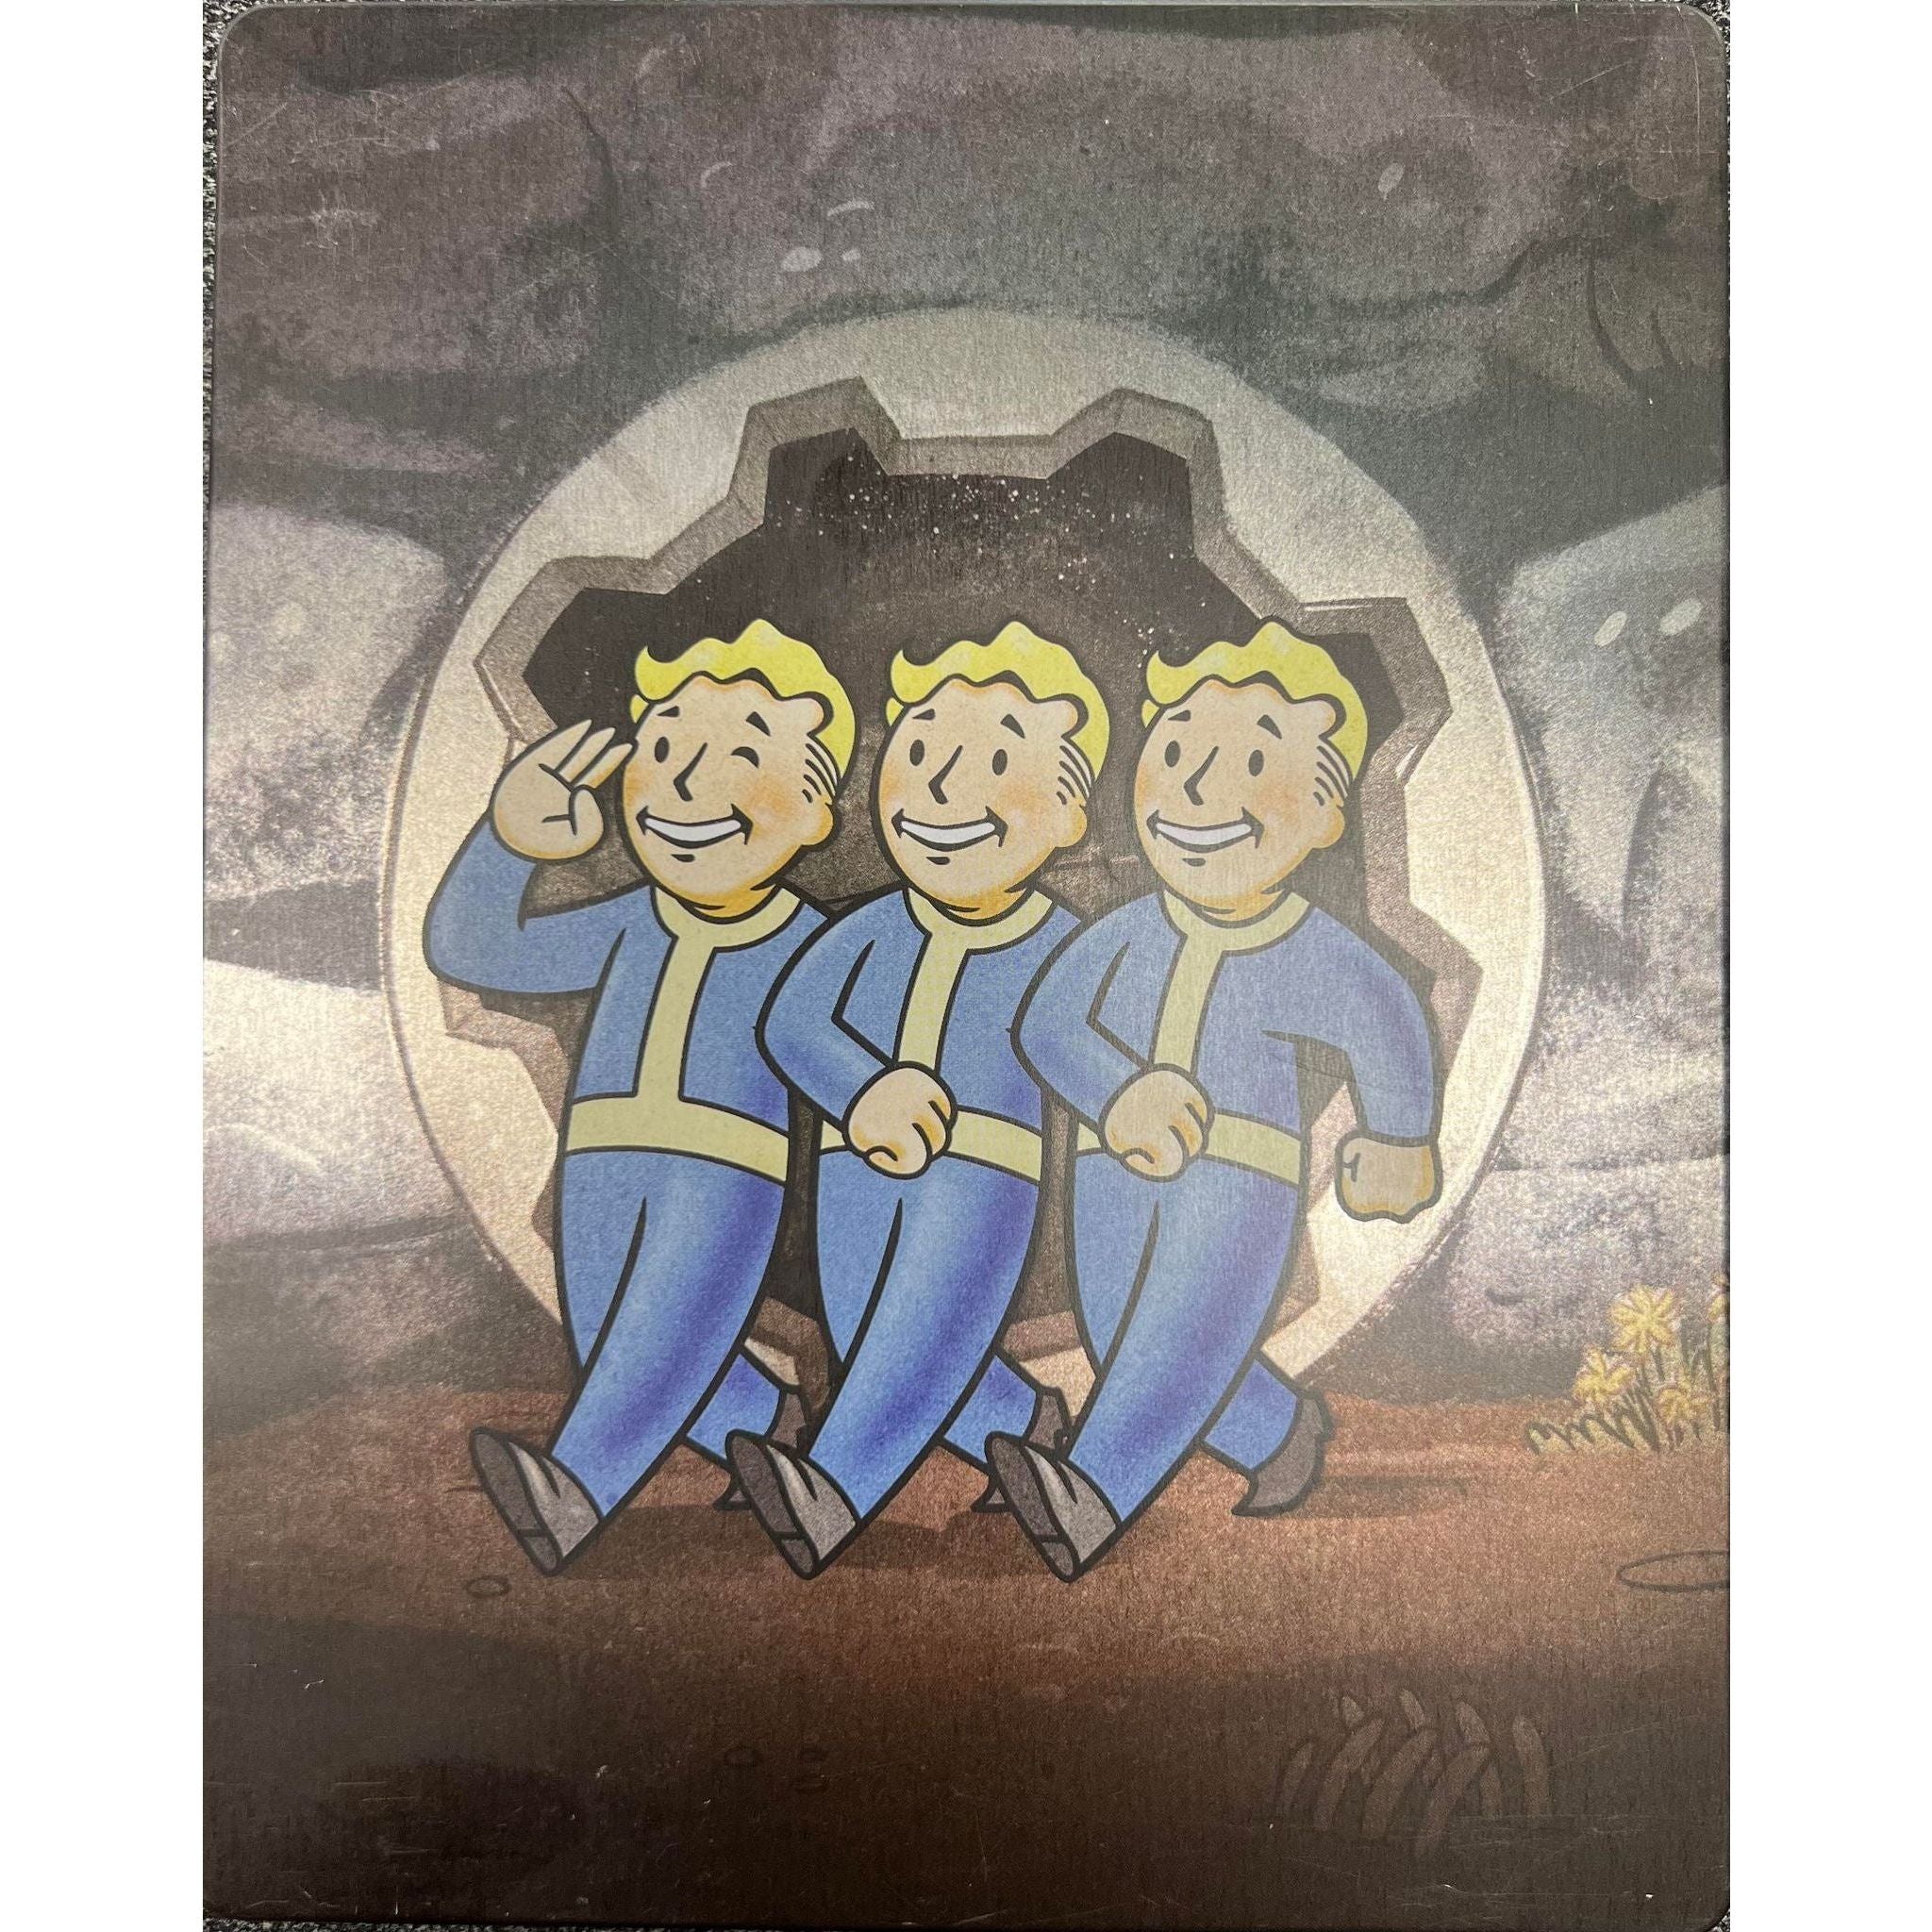 XBOX ONE - Fallout 76 (Steelbook)